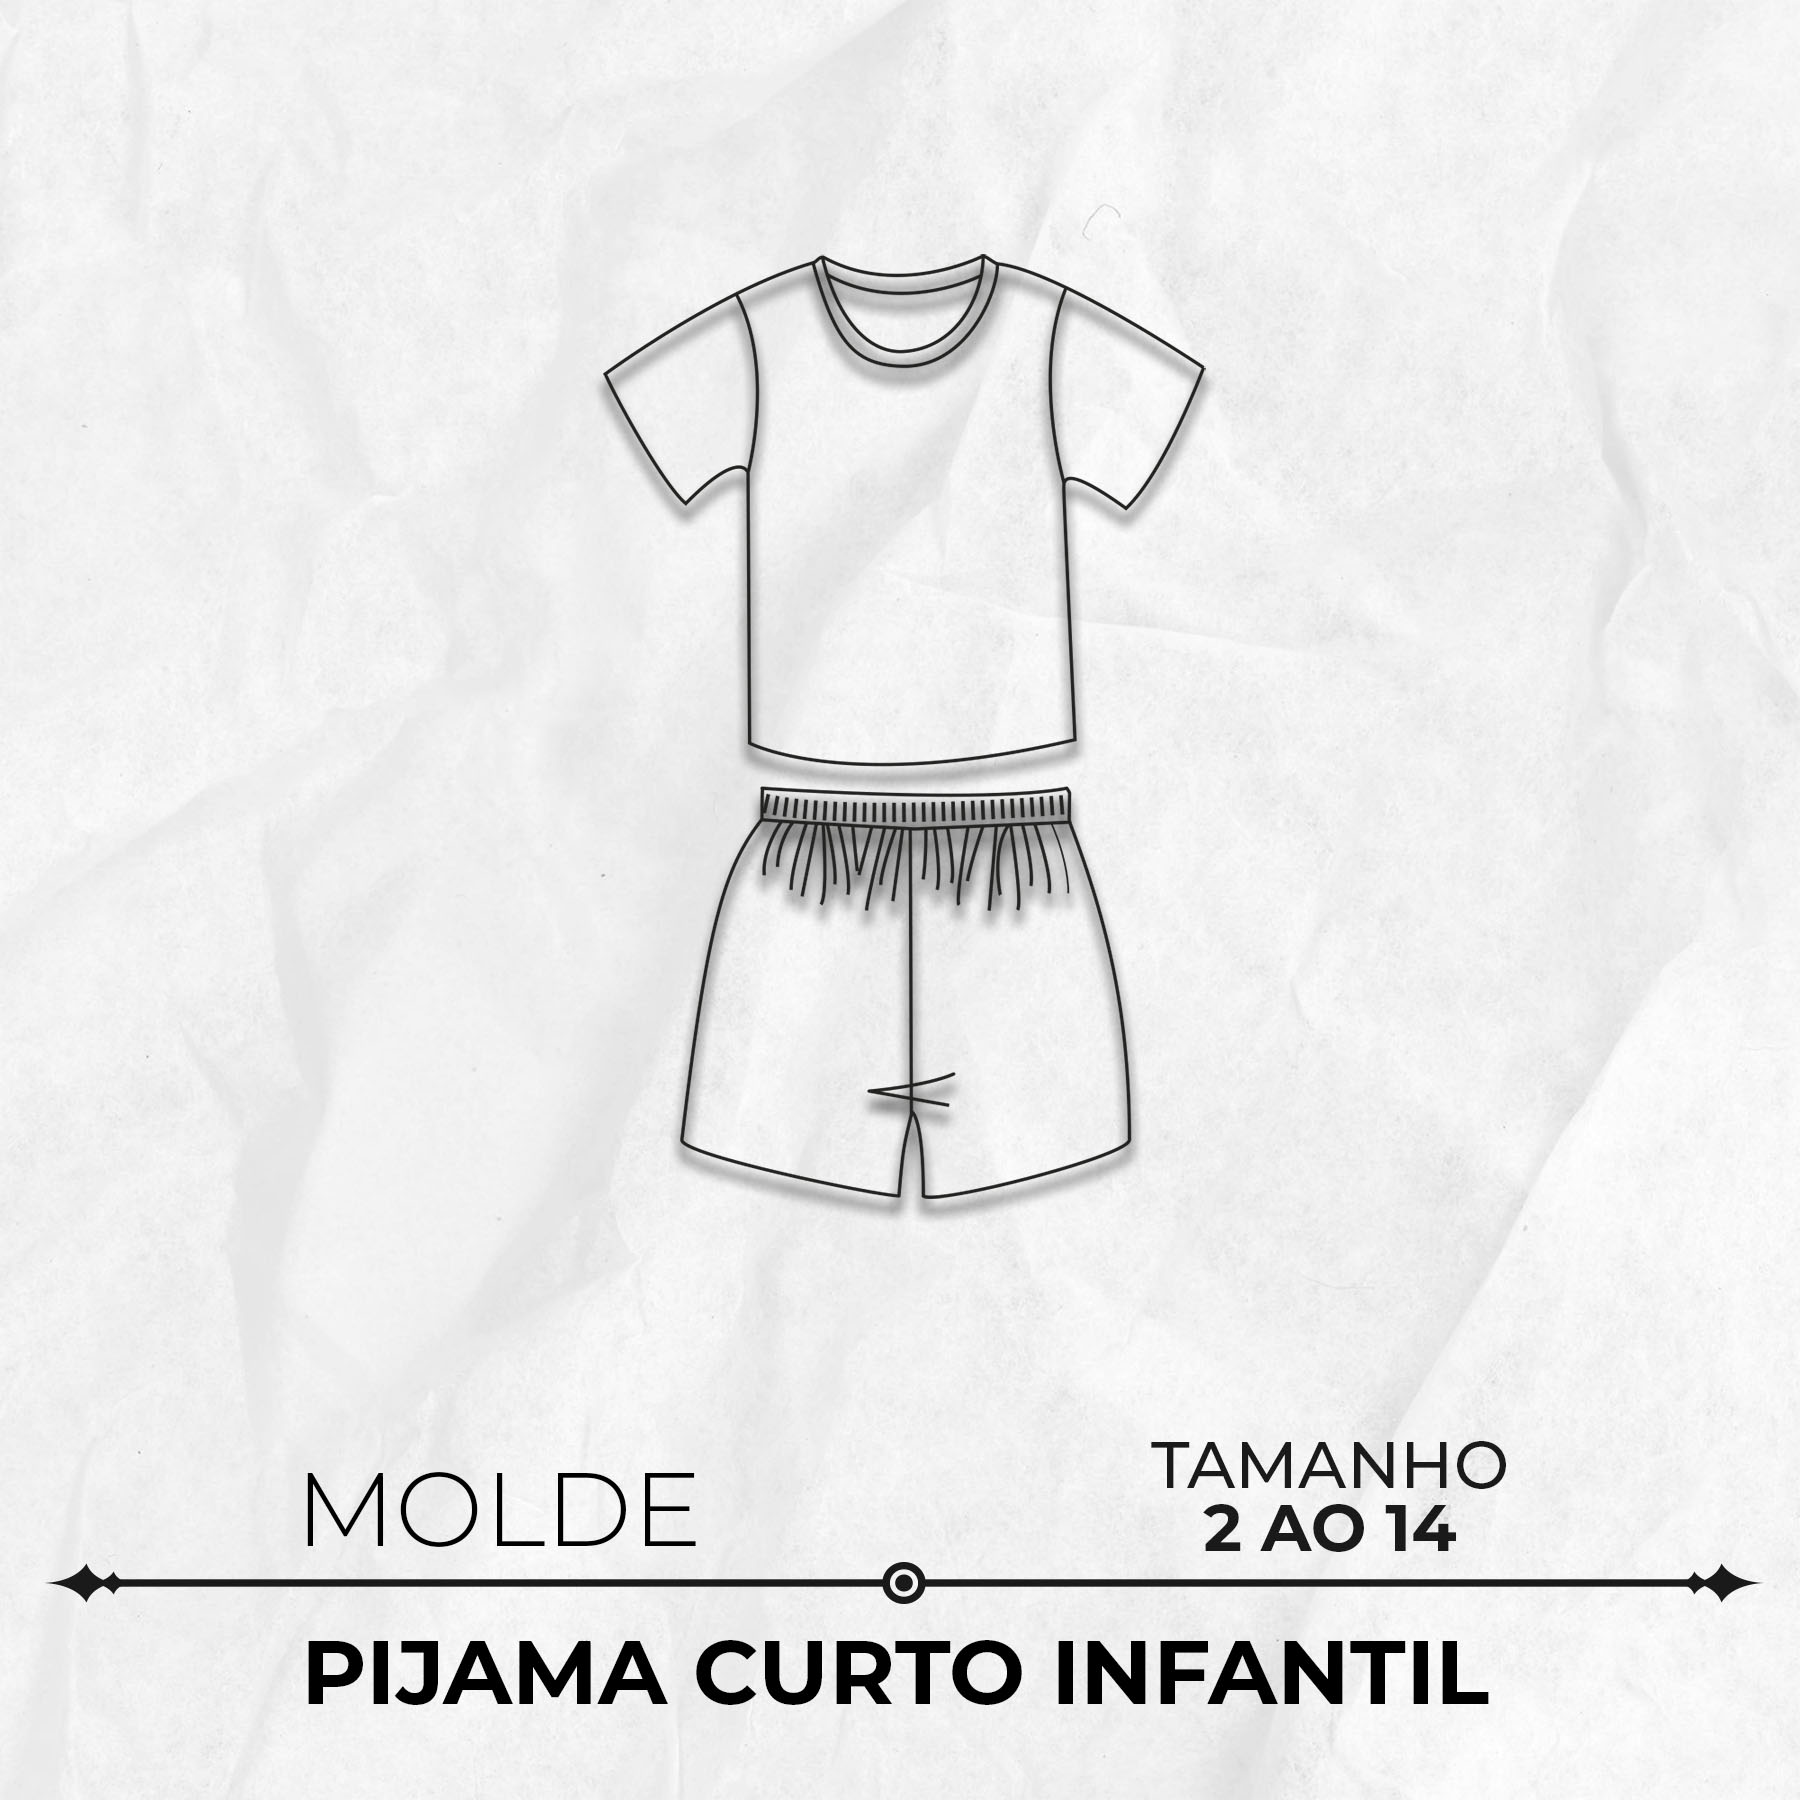 Molde-pijama-curto-infantil--TM-2-ao-14-by-Marlene-Mukai-16916-2-CAPA